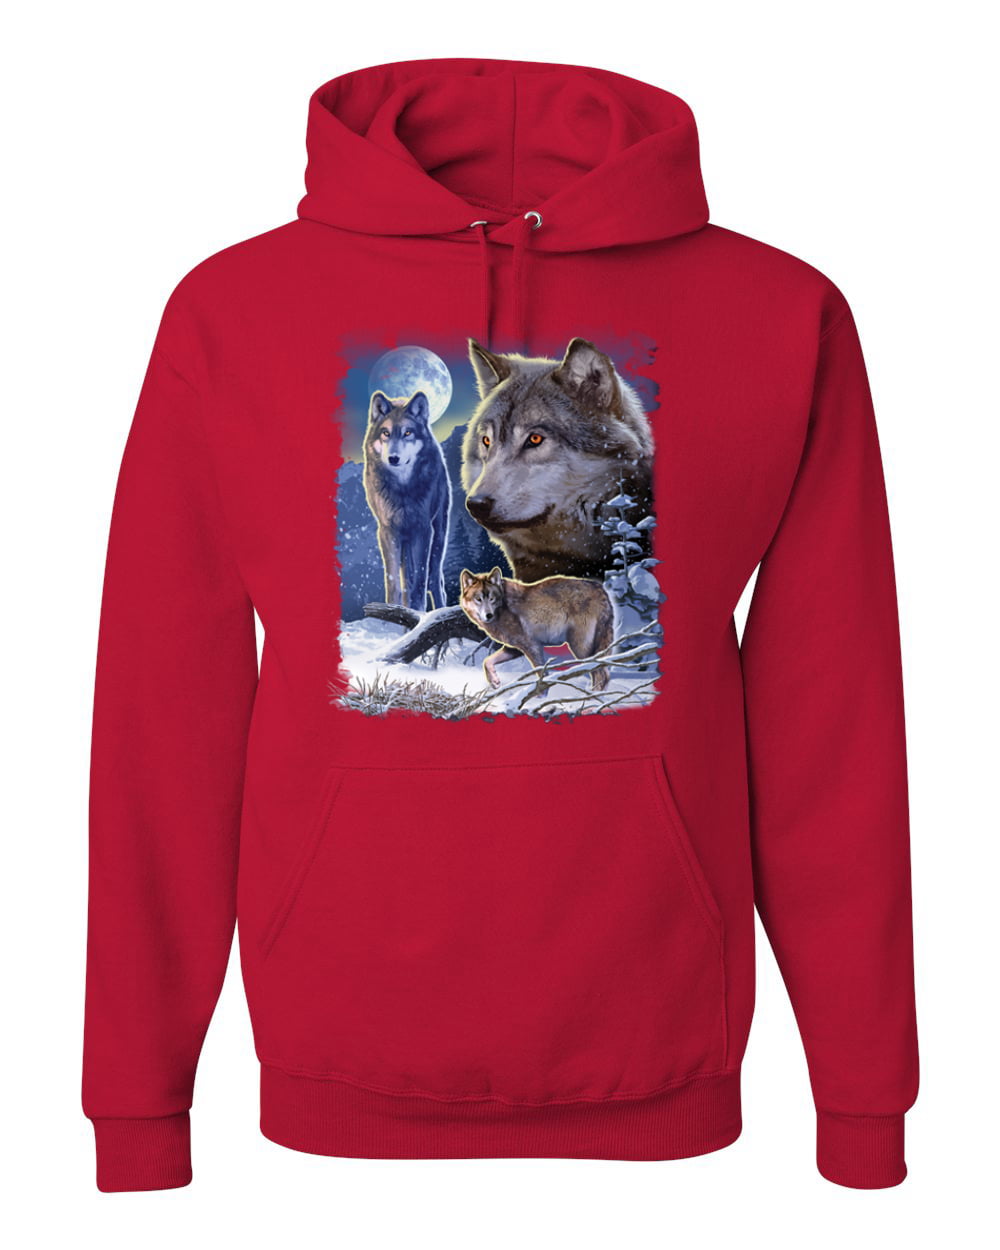 Unisex Thin Sweatshirts Wolf Wild Land Loose Printed 3D Hoodies Men Hooded